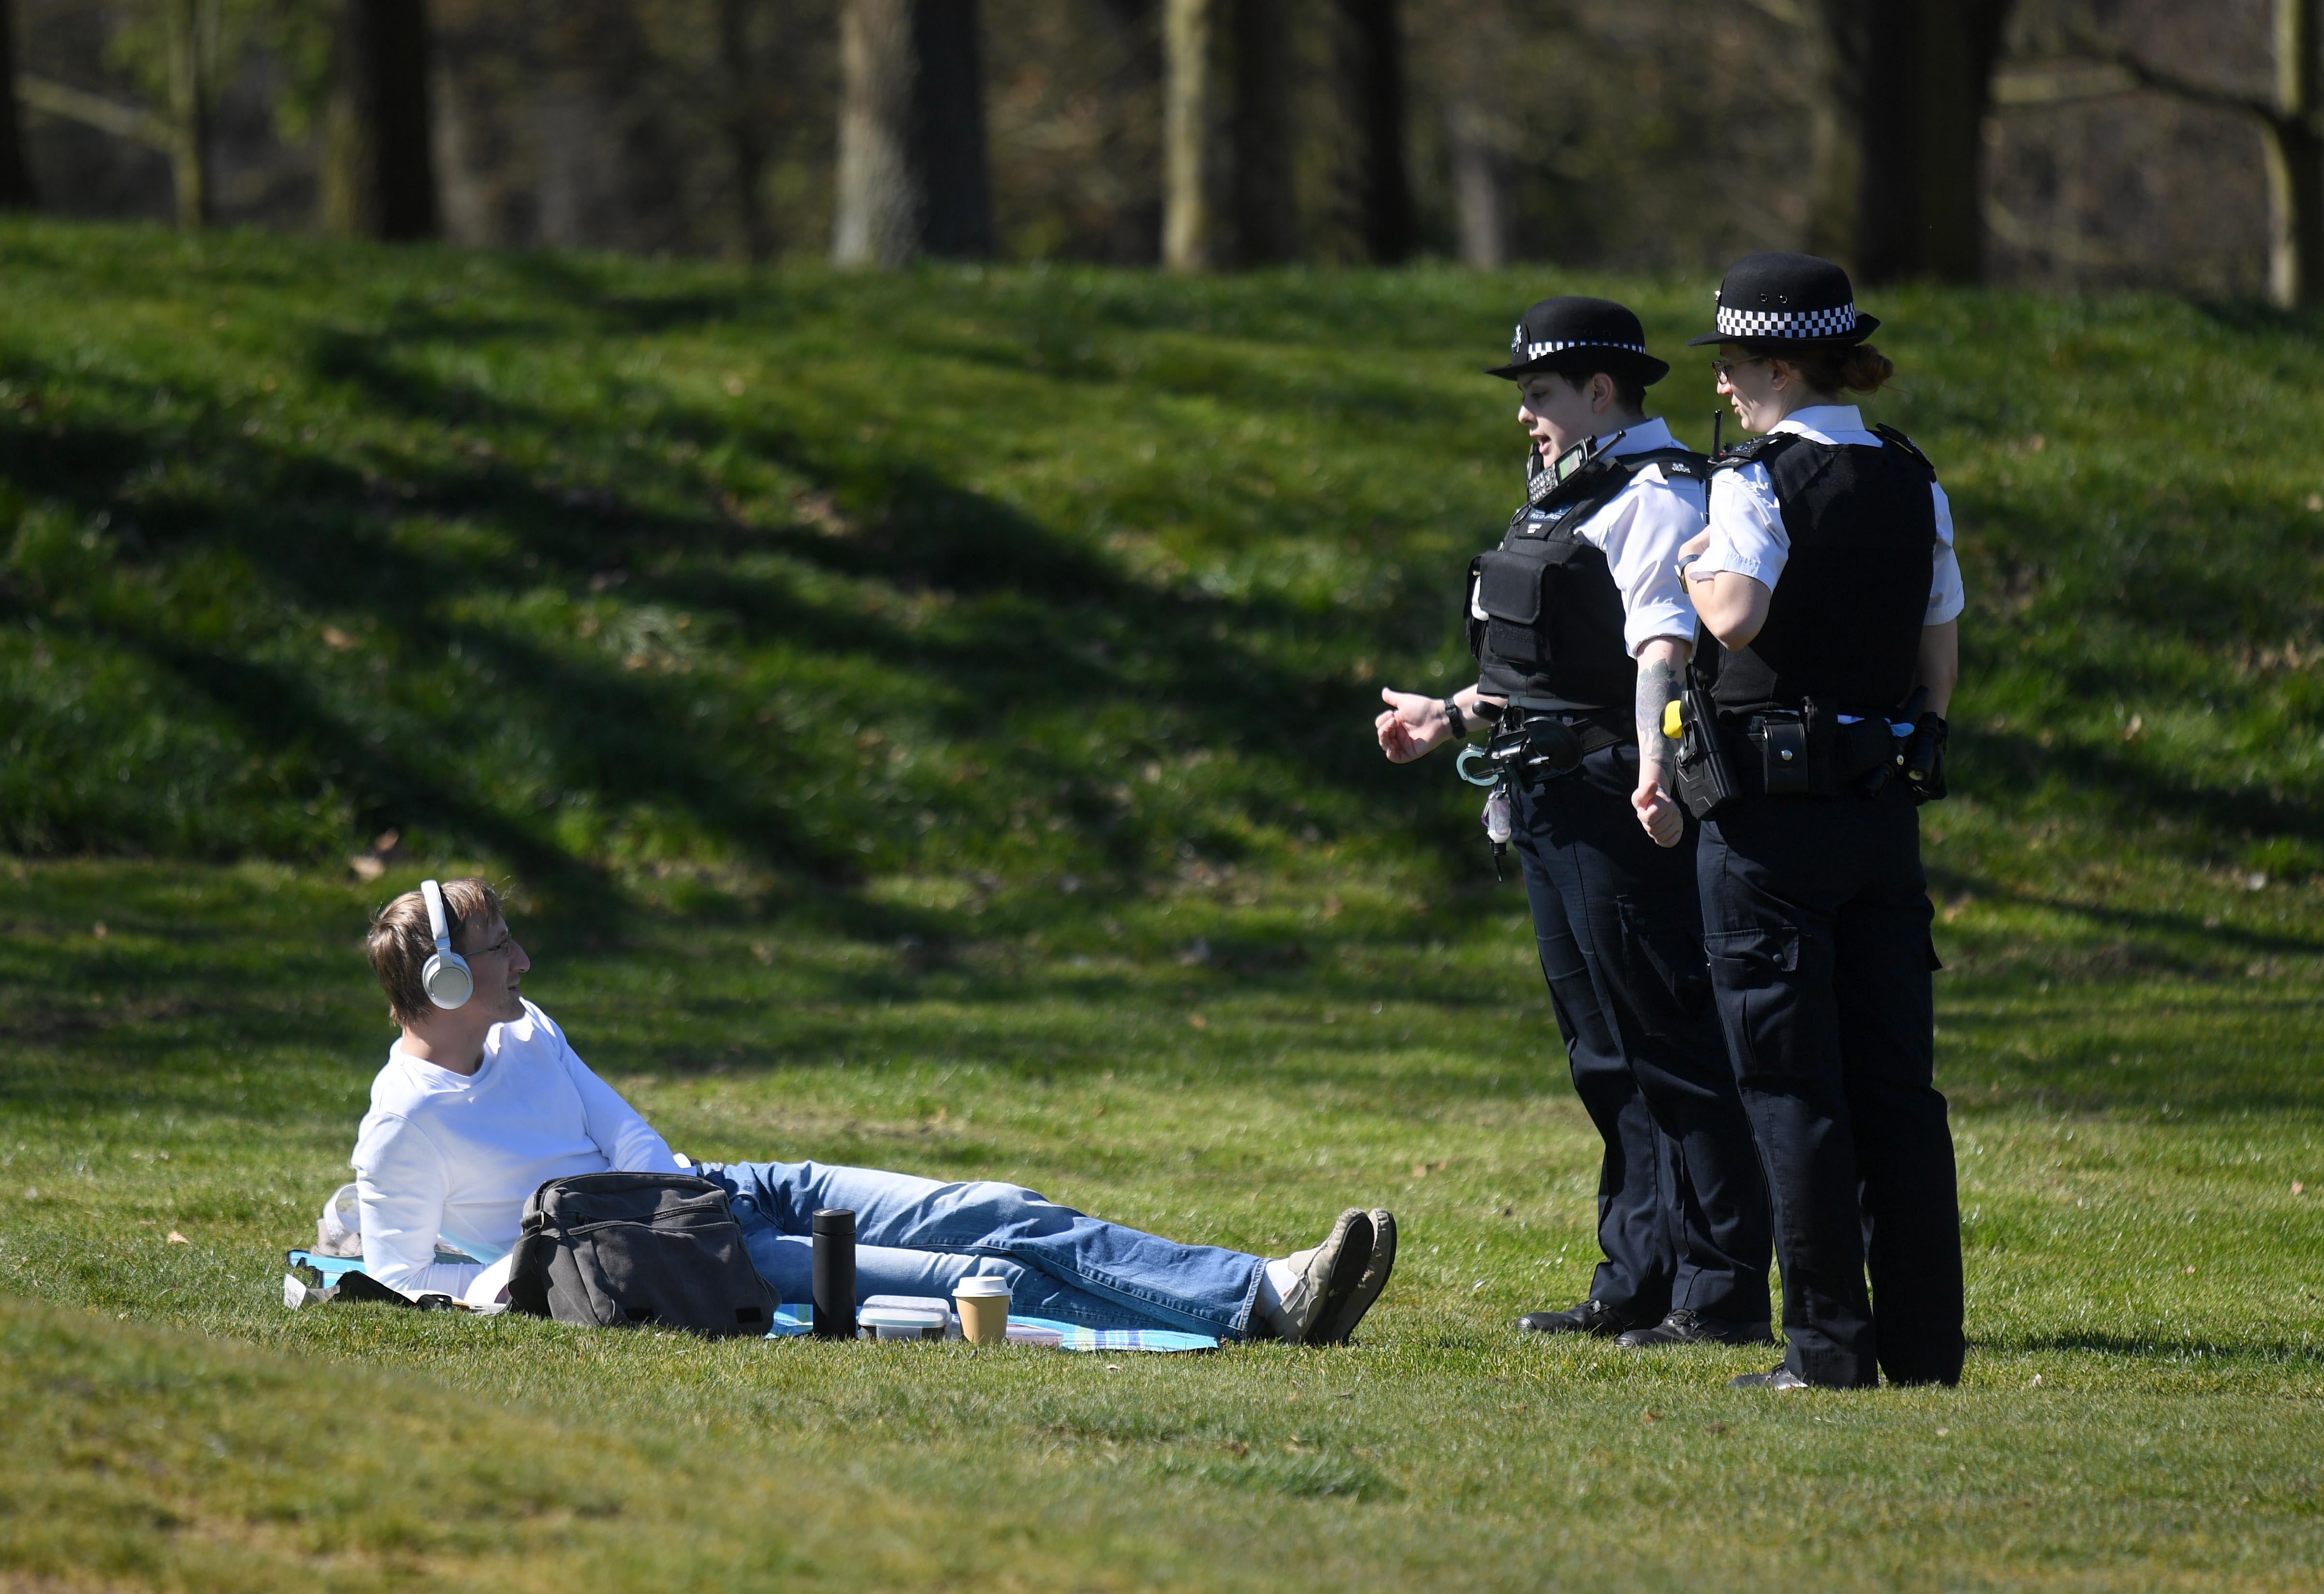 Police enforcing lockdown restrictions speak to a sunbather in a London park